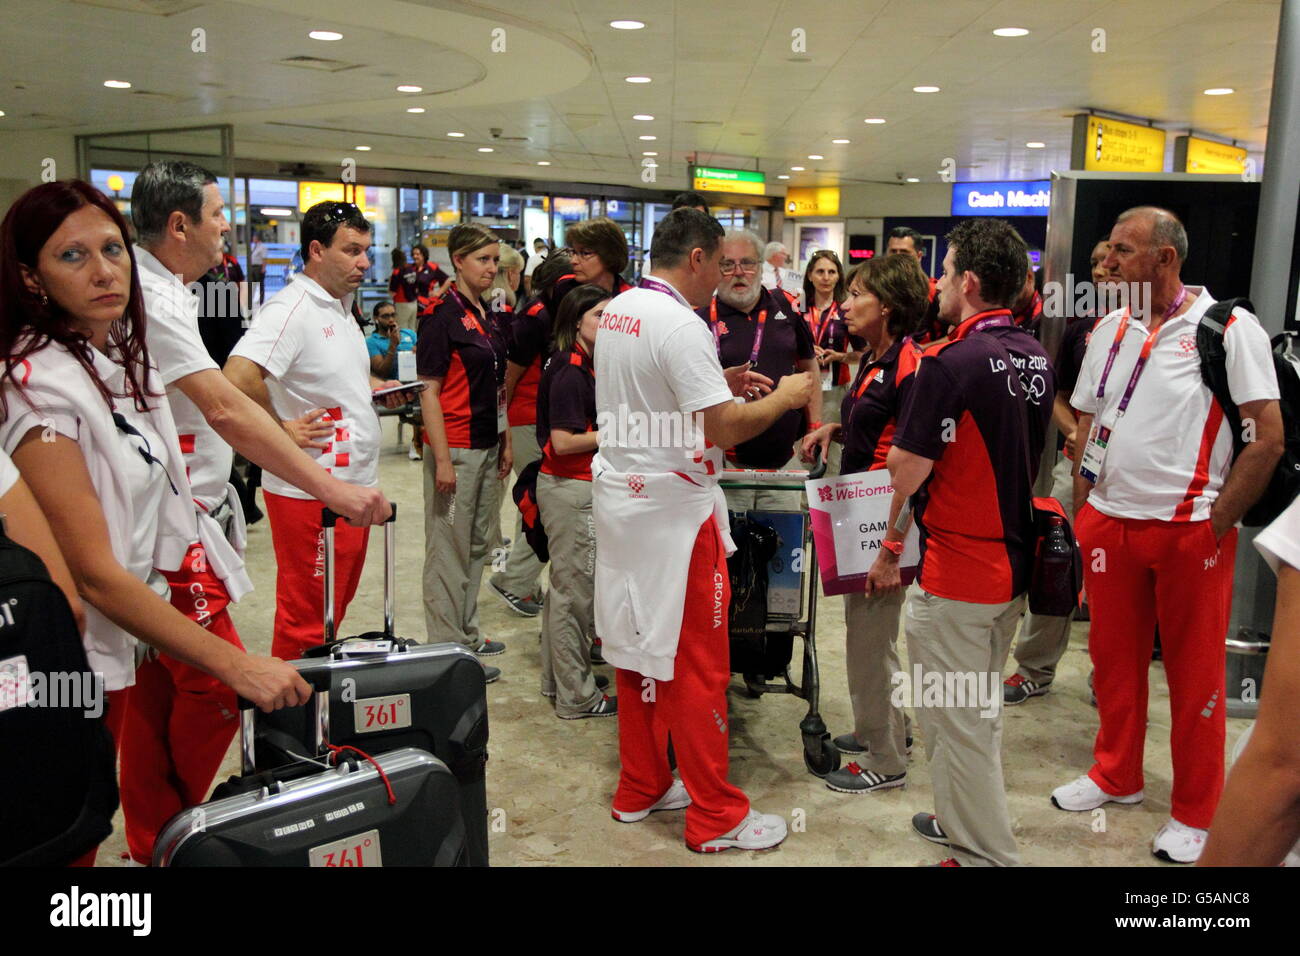 Olympics - London 2012 - Croatian Olympic Team Arrive at Heathrow Airport. The Croatian Olympic Team arrive at Heathrow Airport, London. Stock Photo